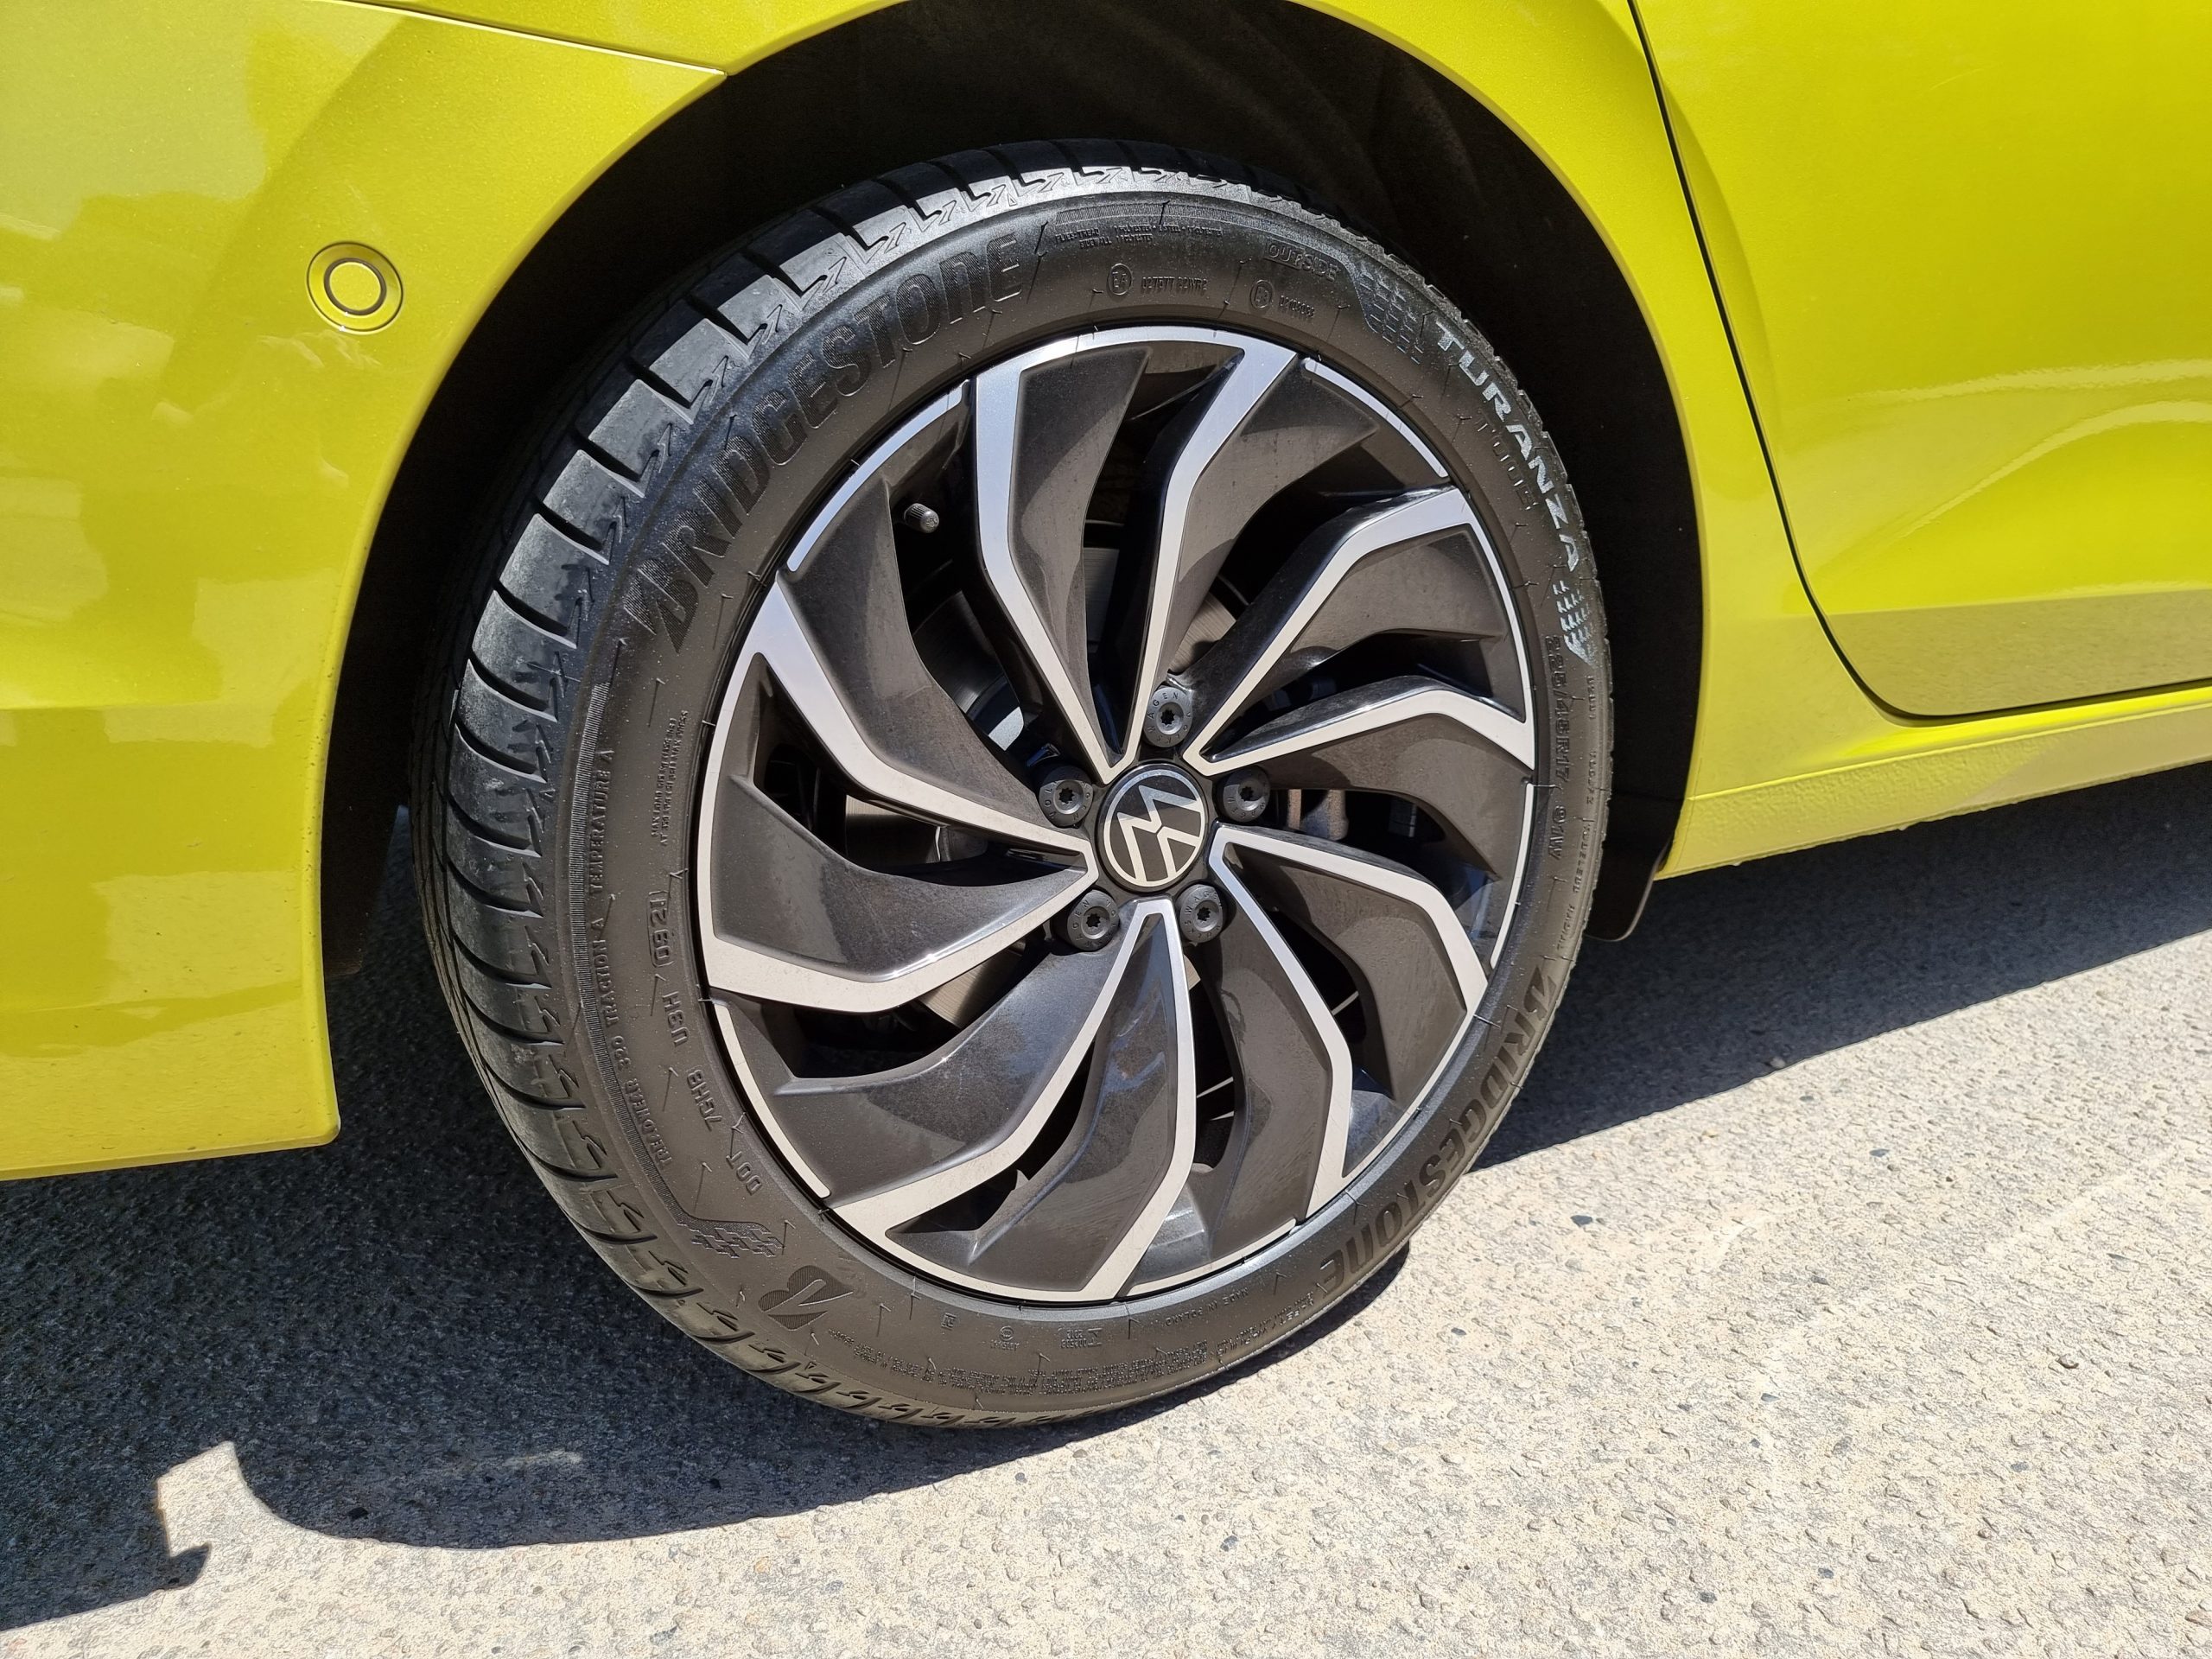 2022 VW Golf Wagon yellow alloy